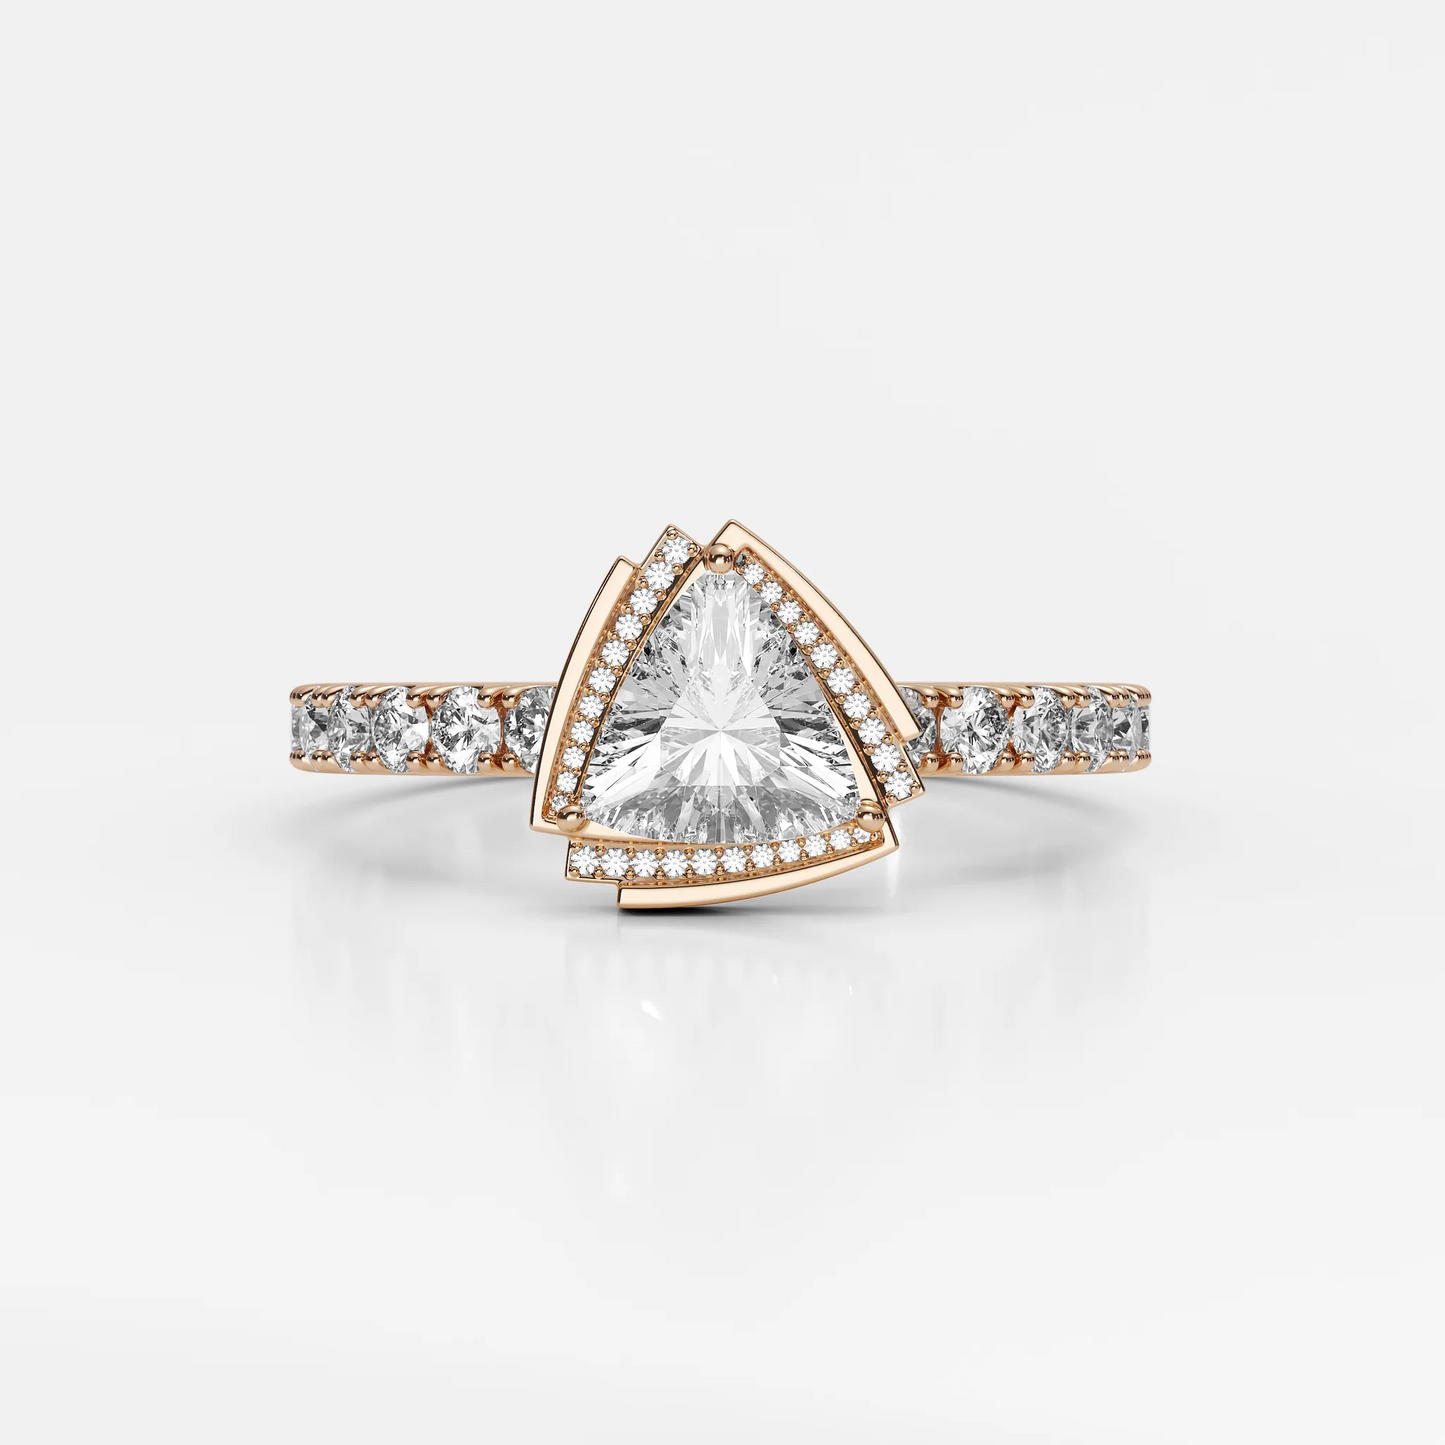 Jasmine-trillion cut diamond